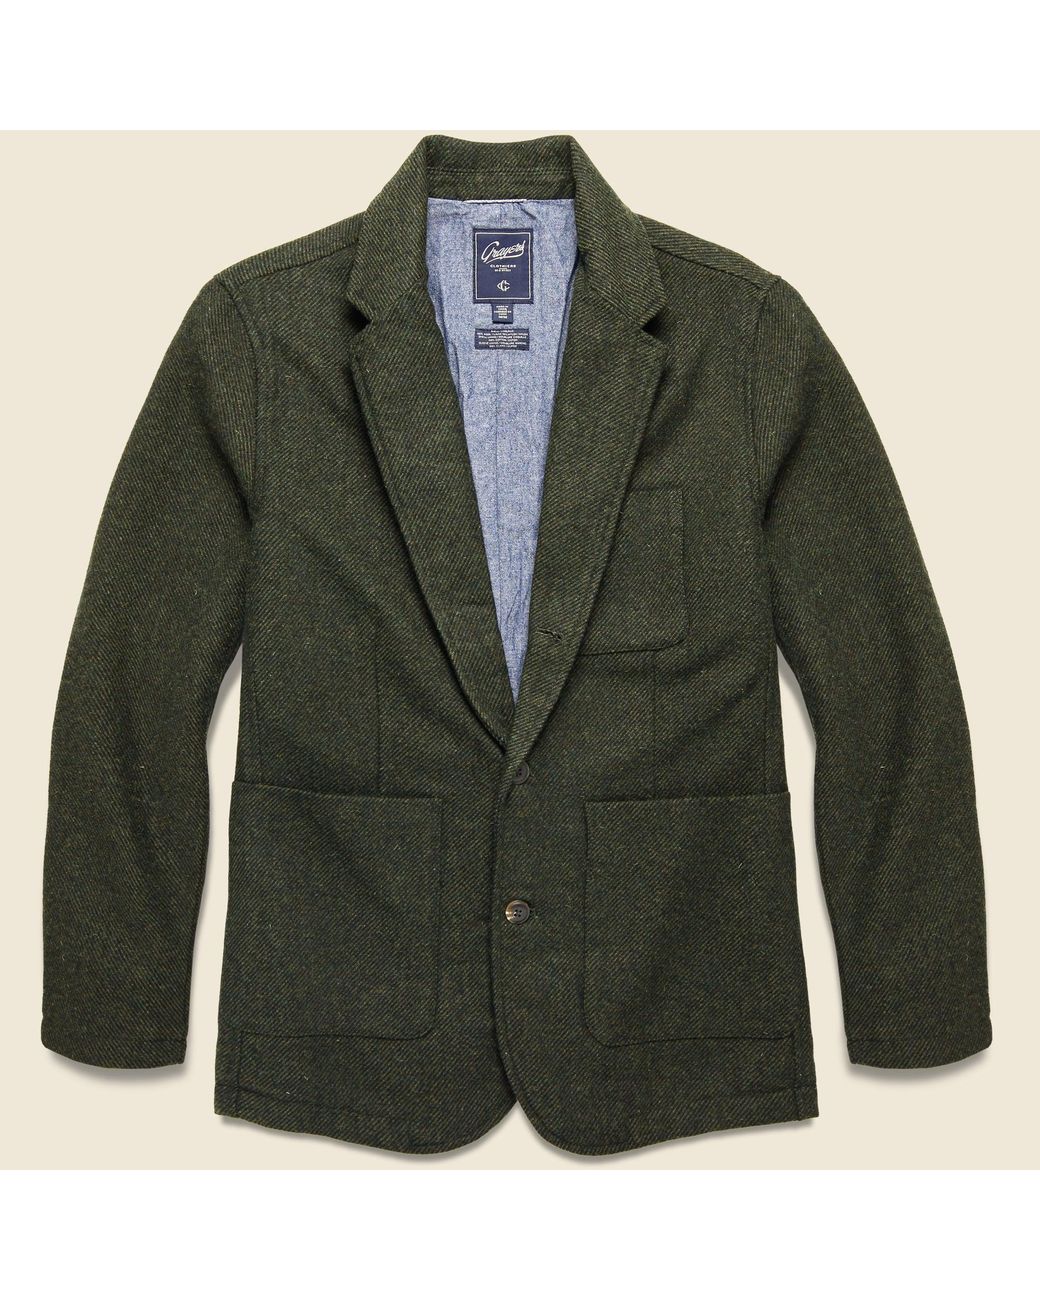 Grayers Hutton Wool Sport Coat - Loden in Green for Men - Lyst